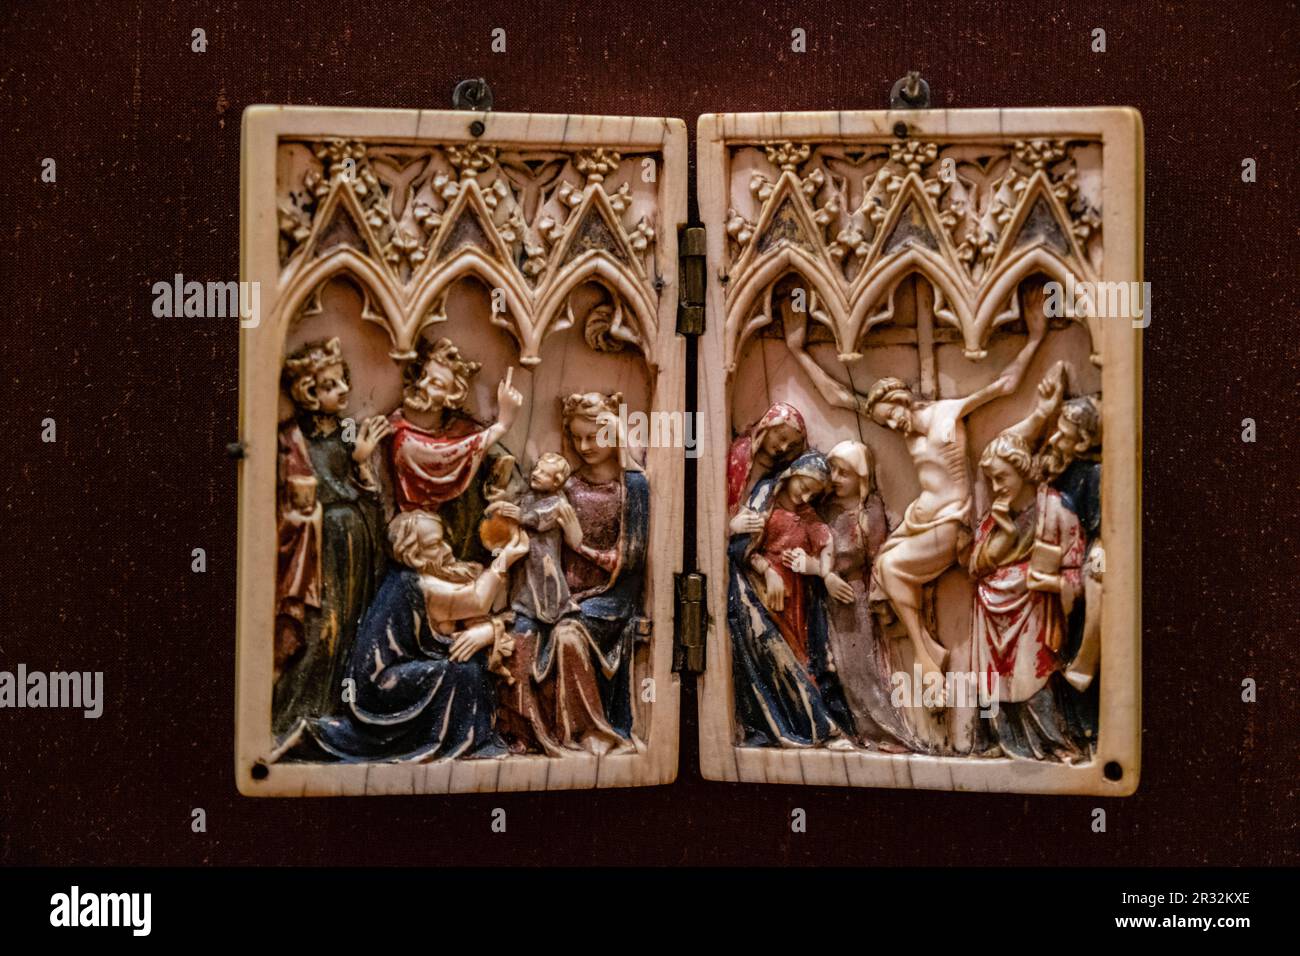 diptico con escenas de la crucifixion de Cristo y la adoracion de los Magos, Paris, siglo XIII, Fundación Calouste Gulbenkian, («Fundação Calouste Gulbenkian»), Lisboa, Portugal. Stock Photo